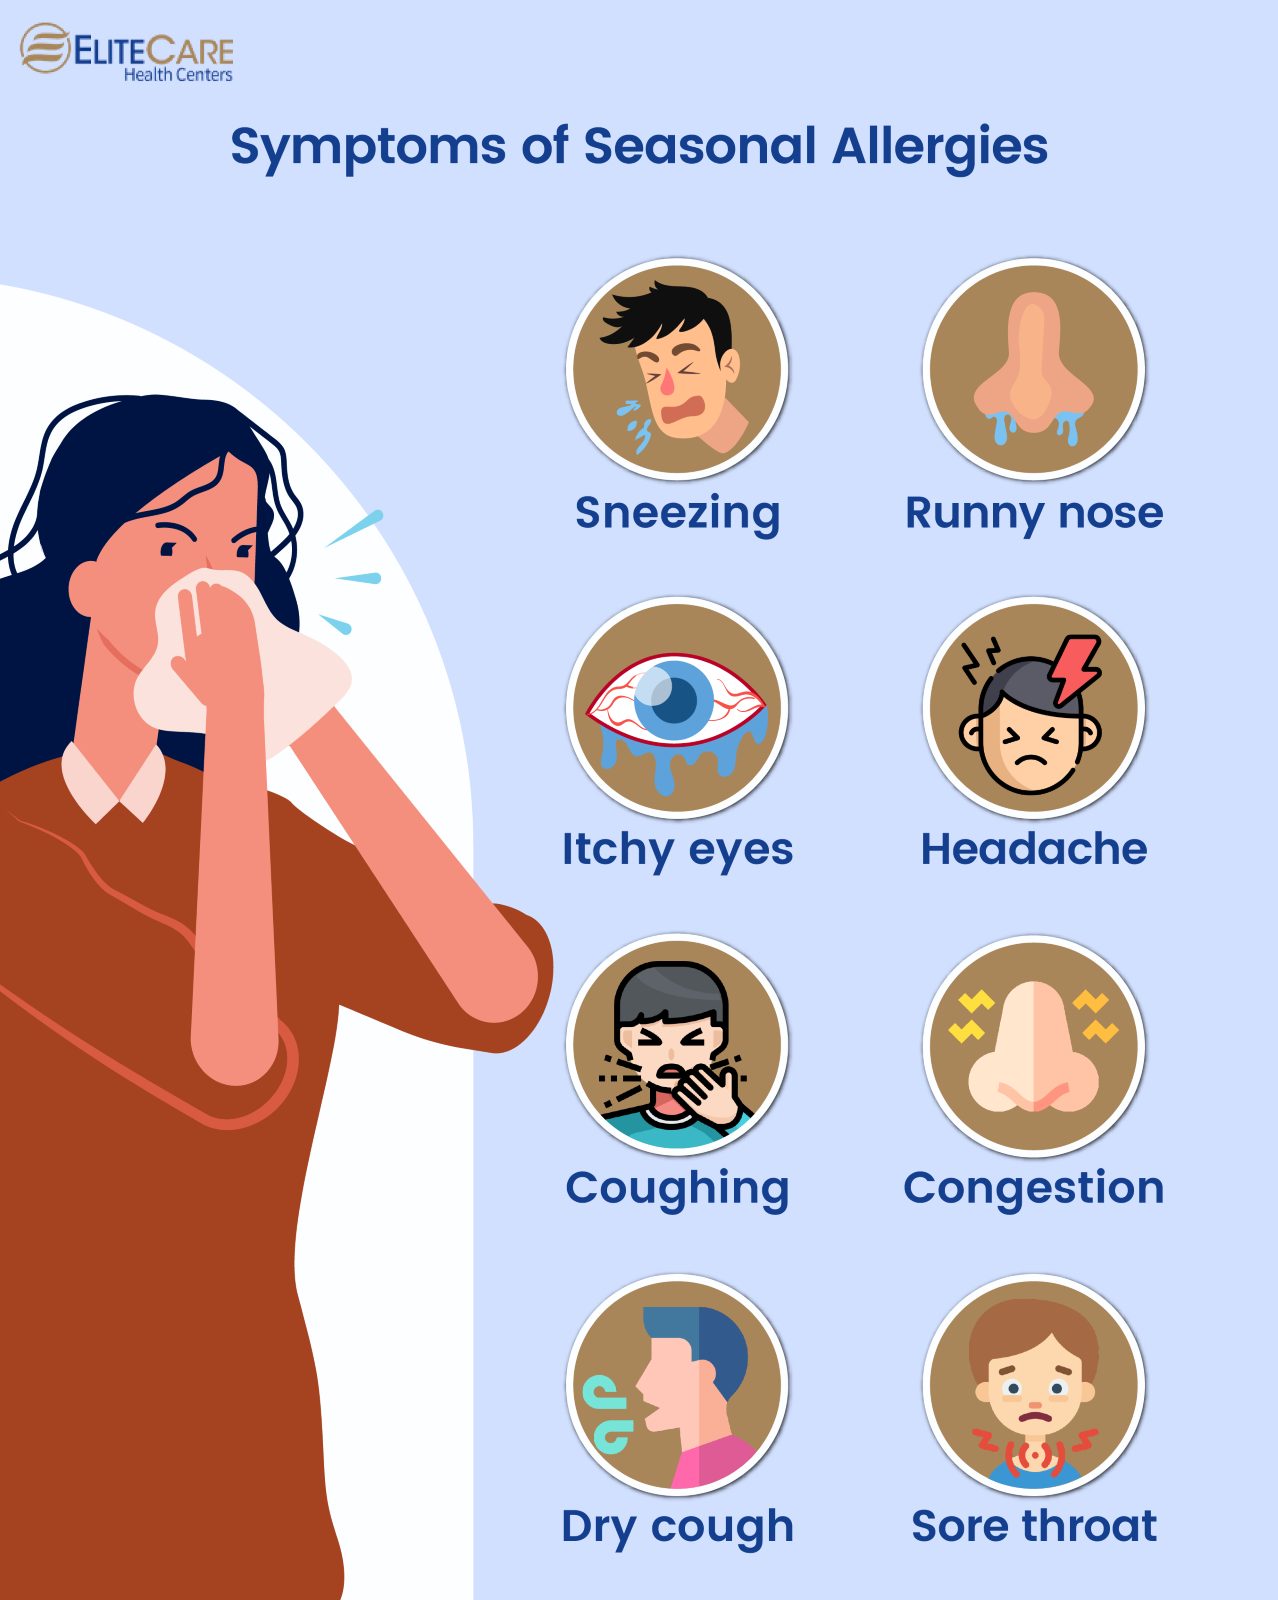 Symptoms of Seasonal Allergies